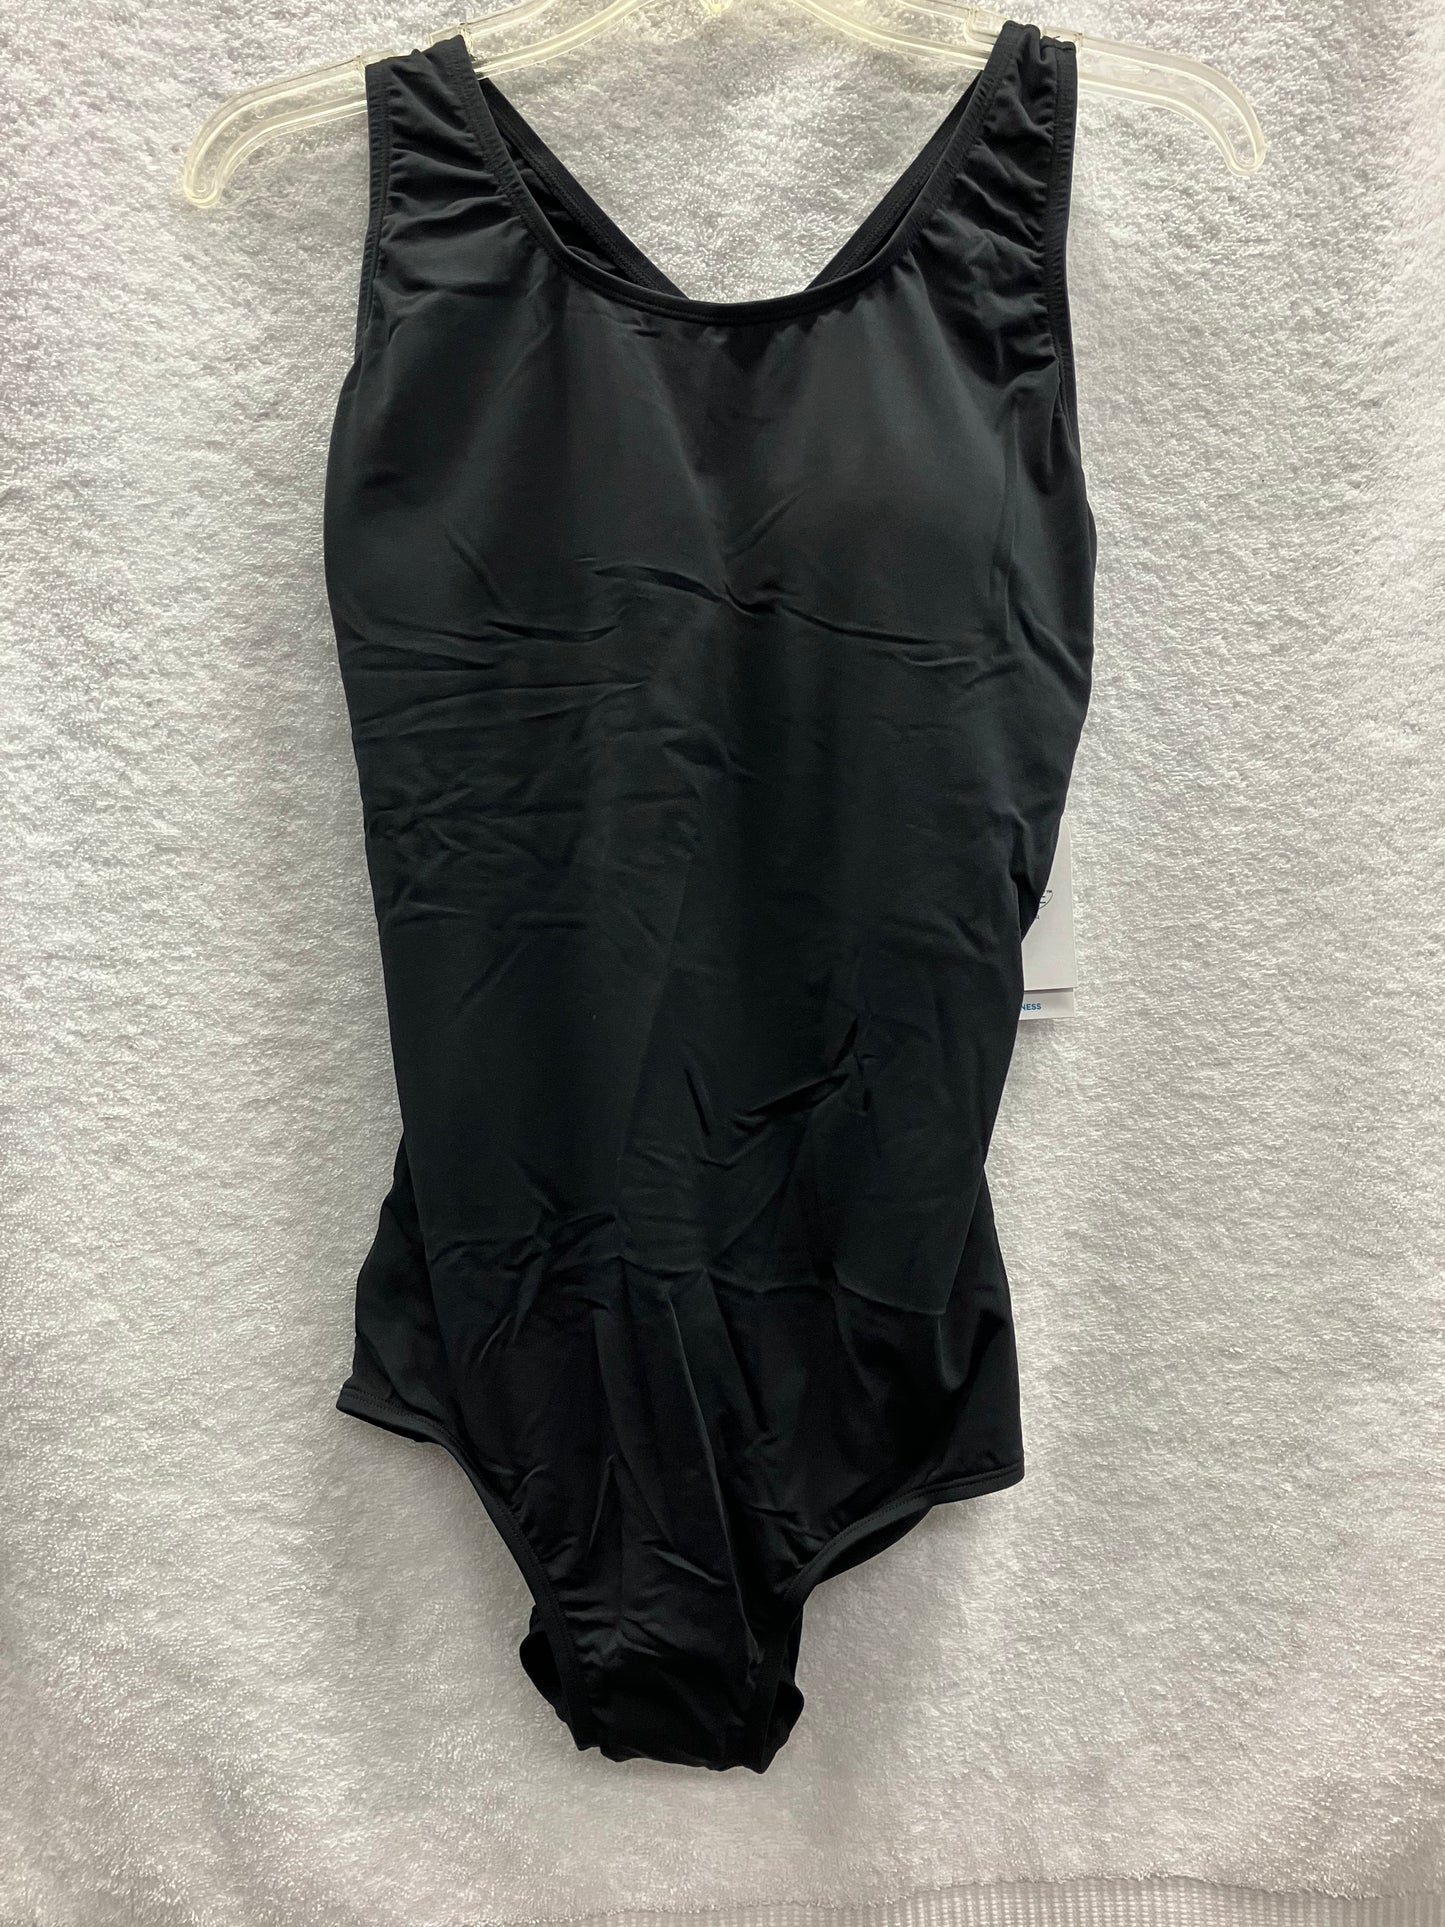 Dolfin Aquatic Fitness Black H Back Suit Size 14